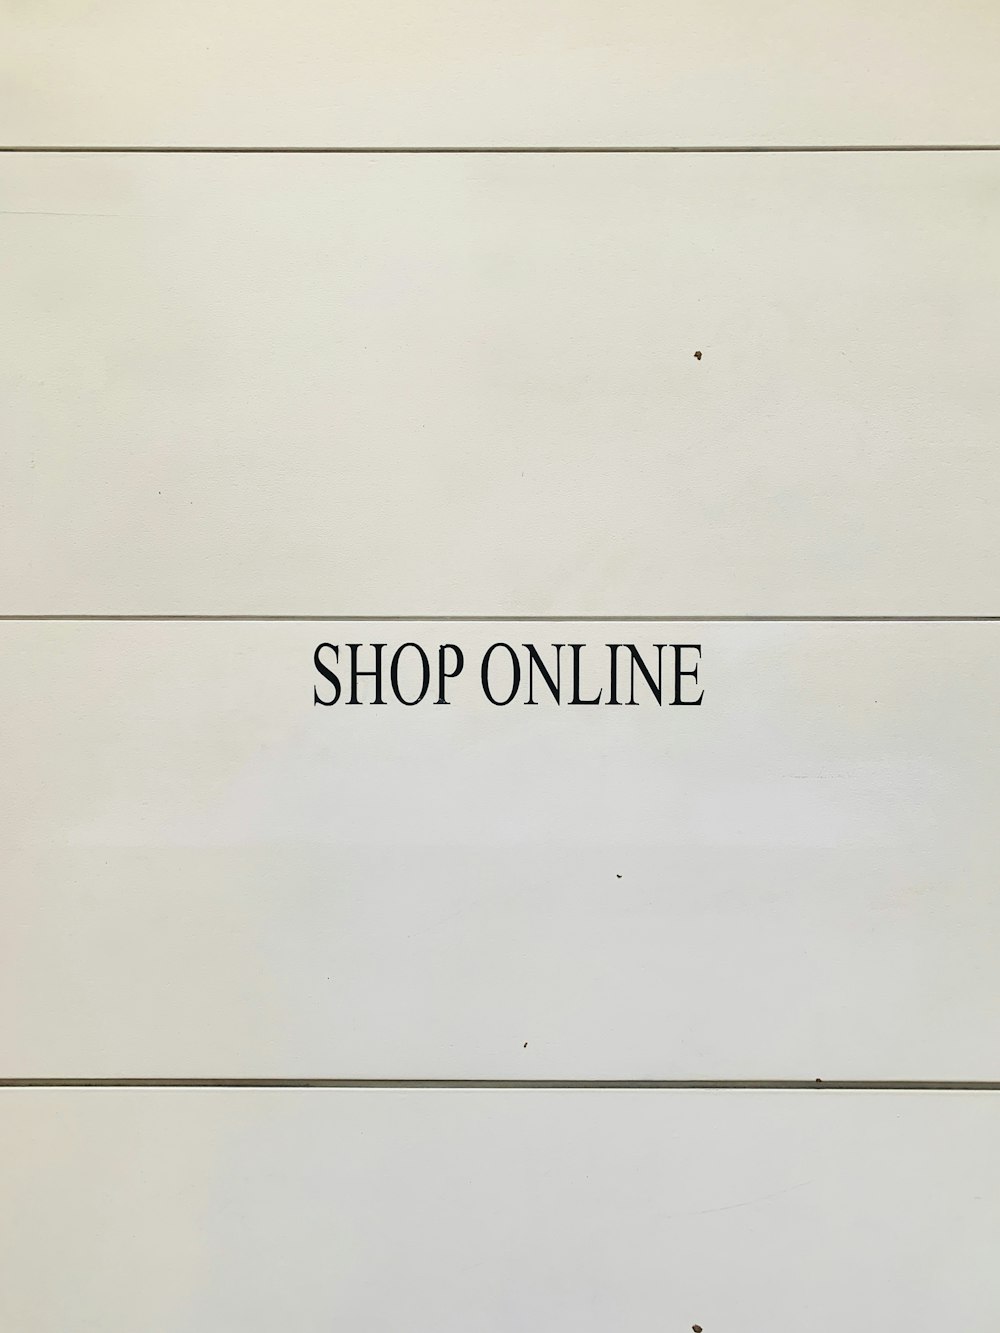 black text labeled Shop Online